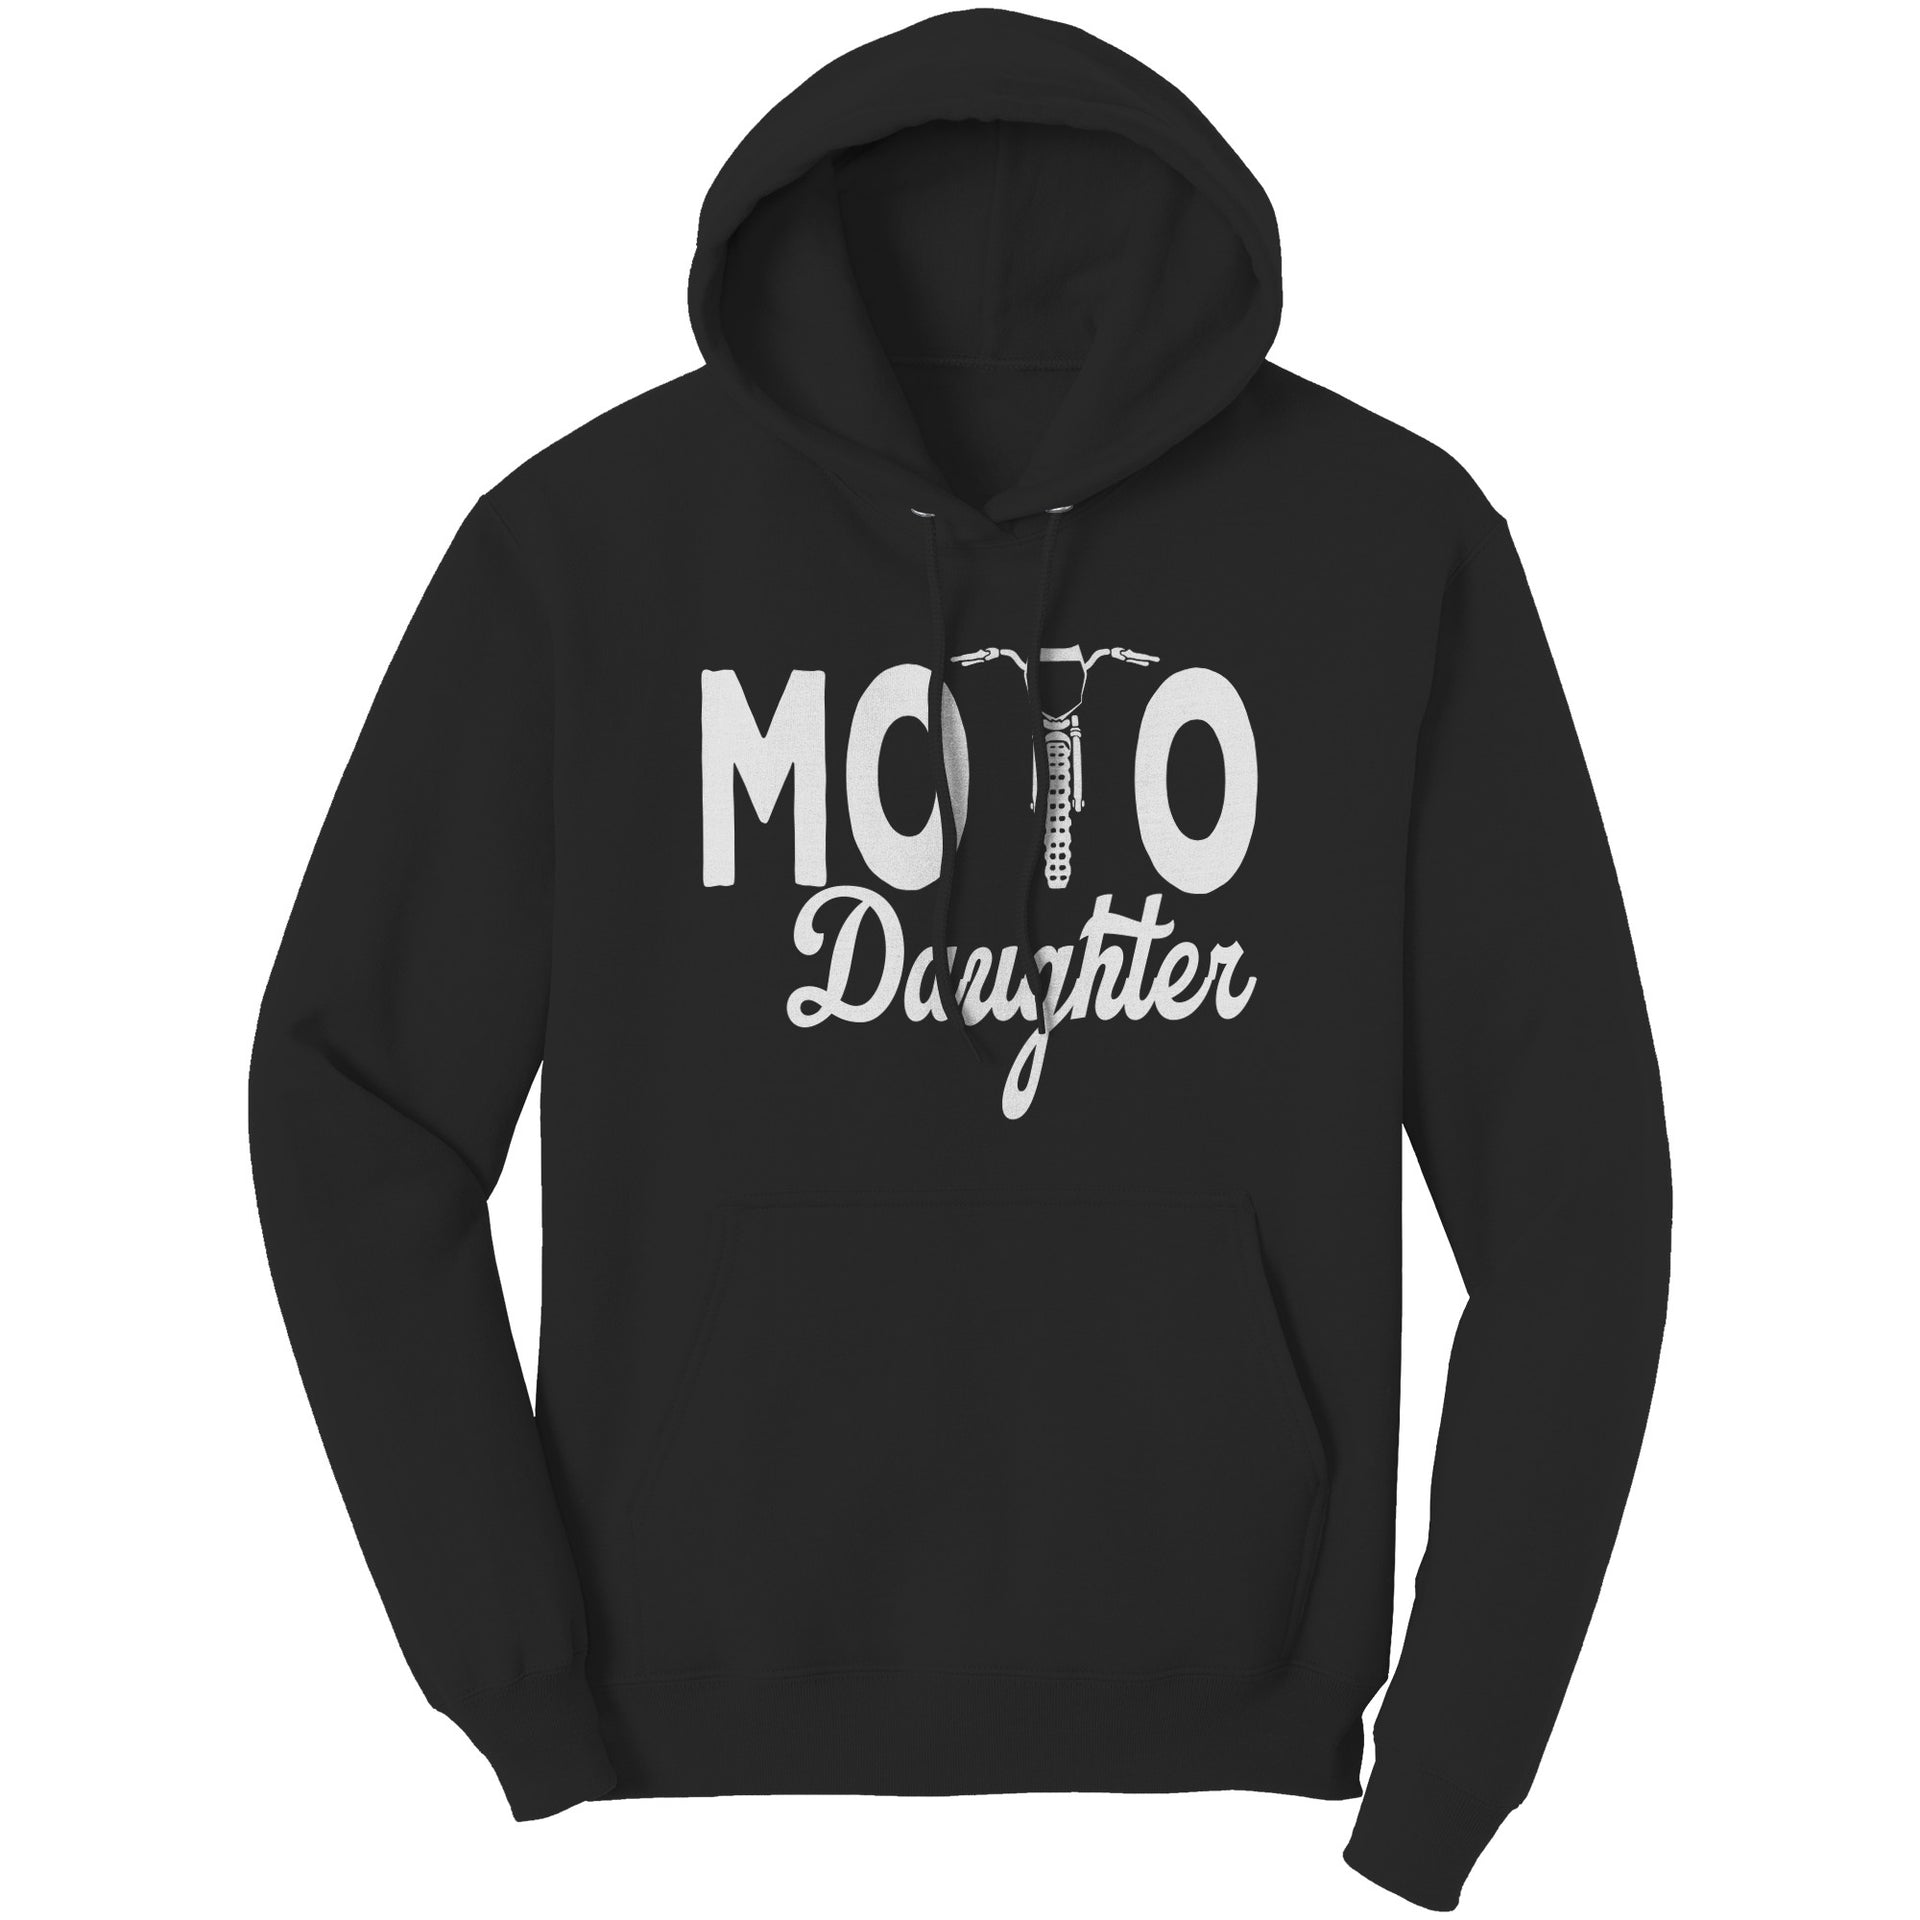 Moto Daughter T-shirts